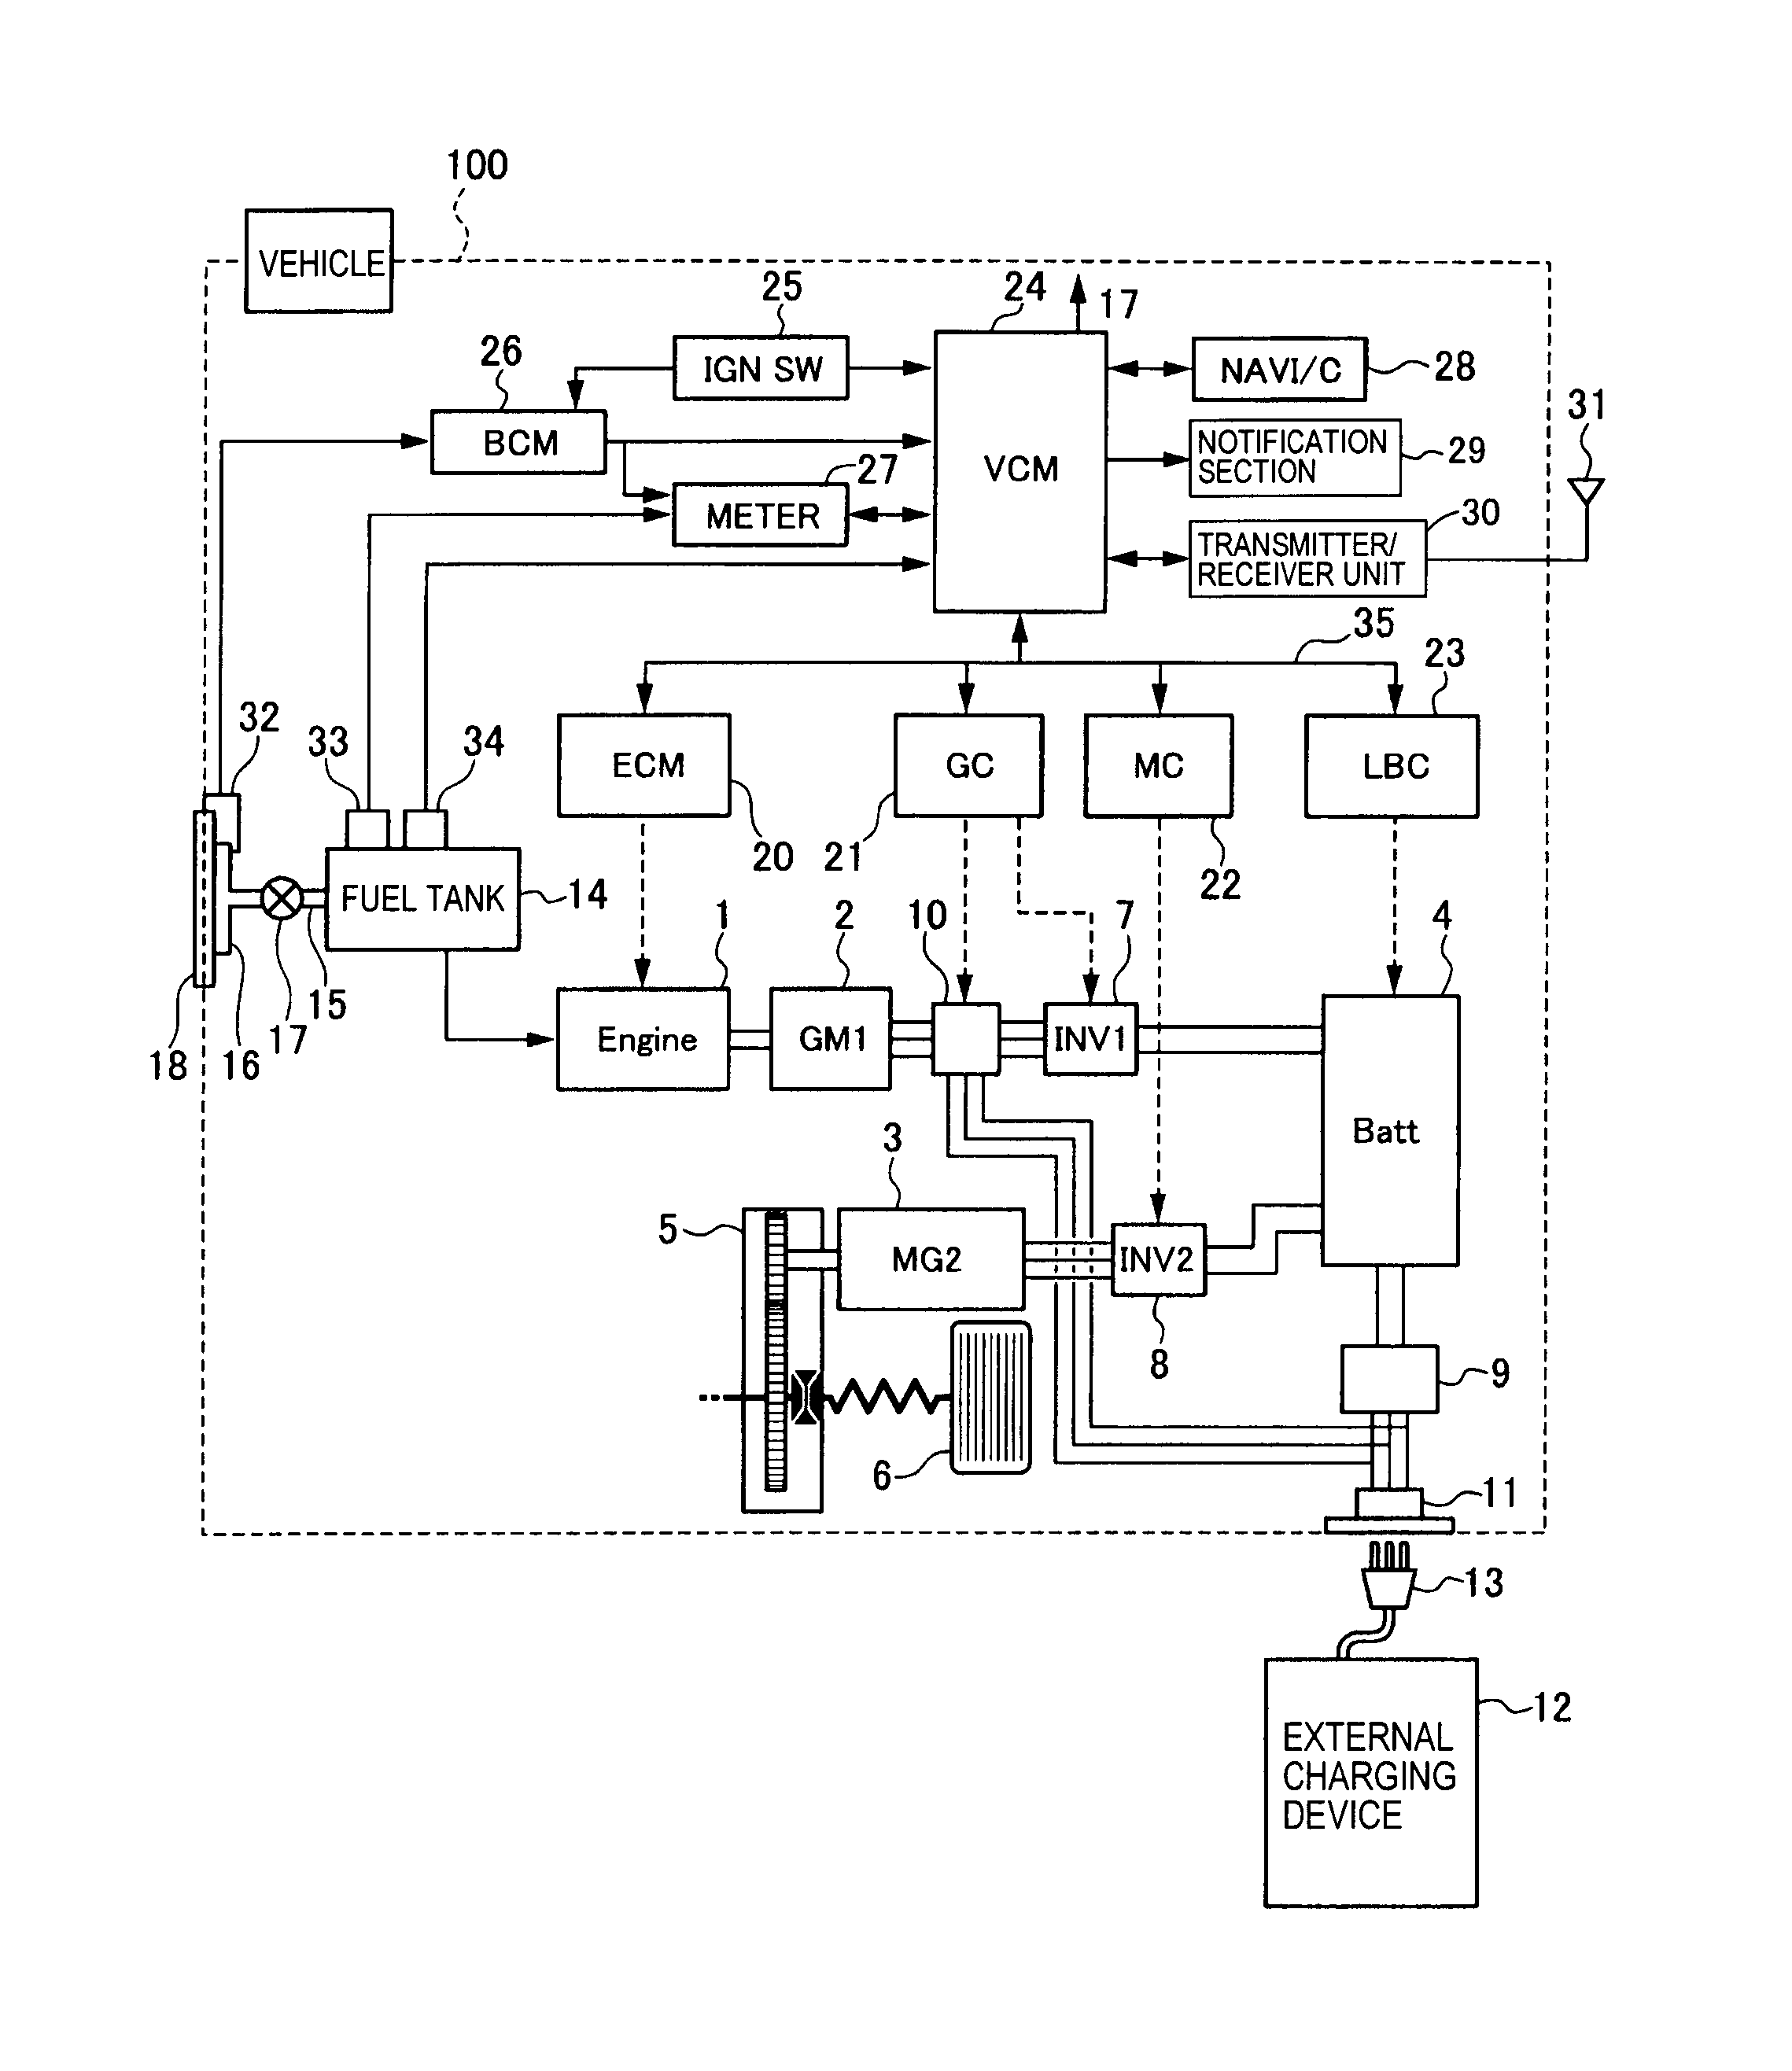 trombetta 862-1211-211-16 wiring diagram